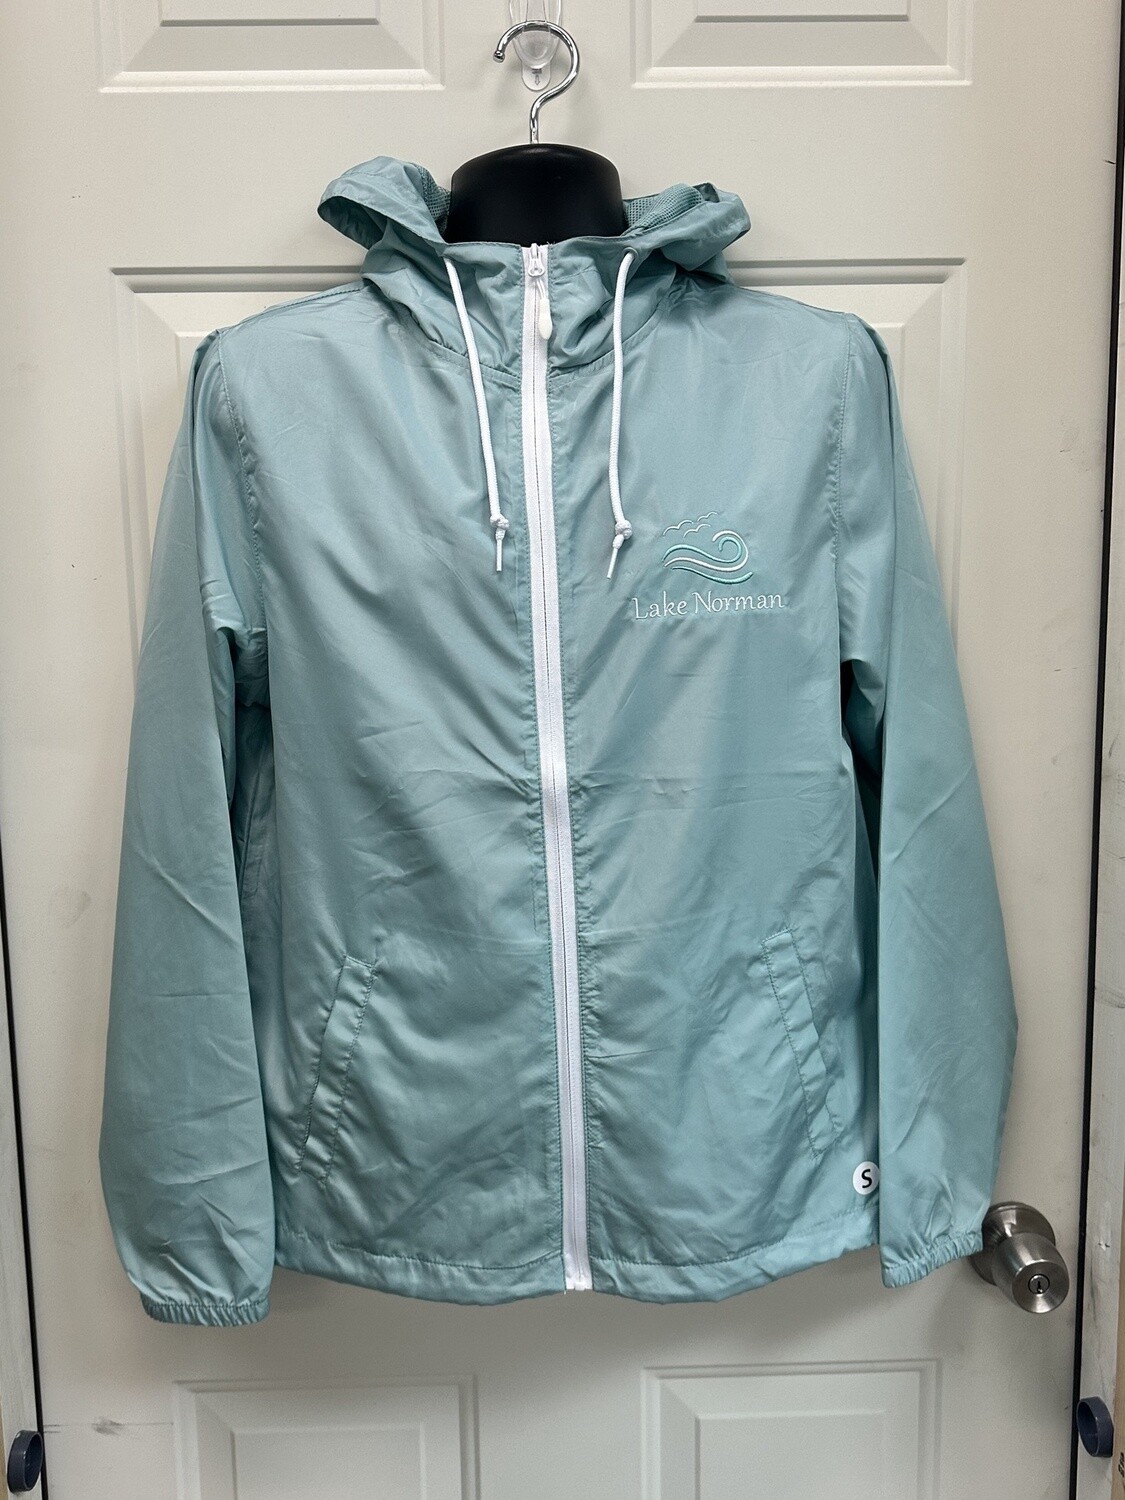 LKN Wave Jacket, Size: 3XL, Colour: Aqua/White